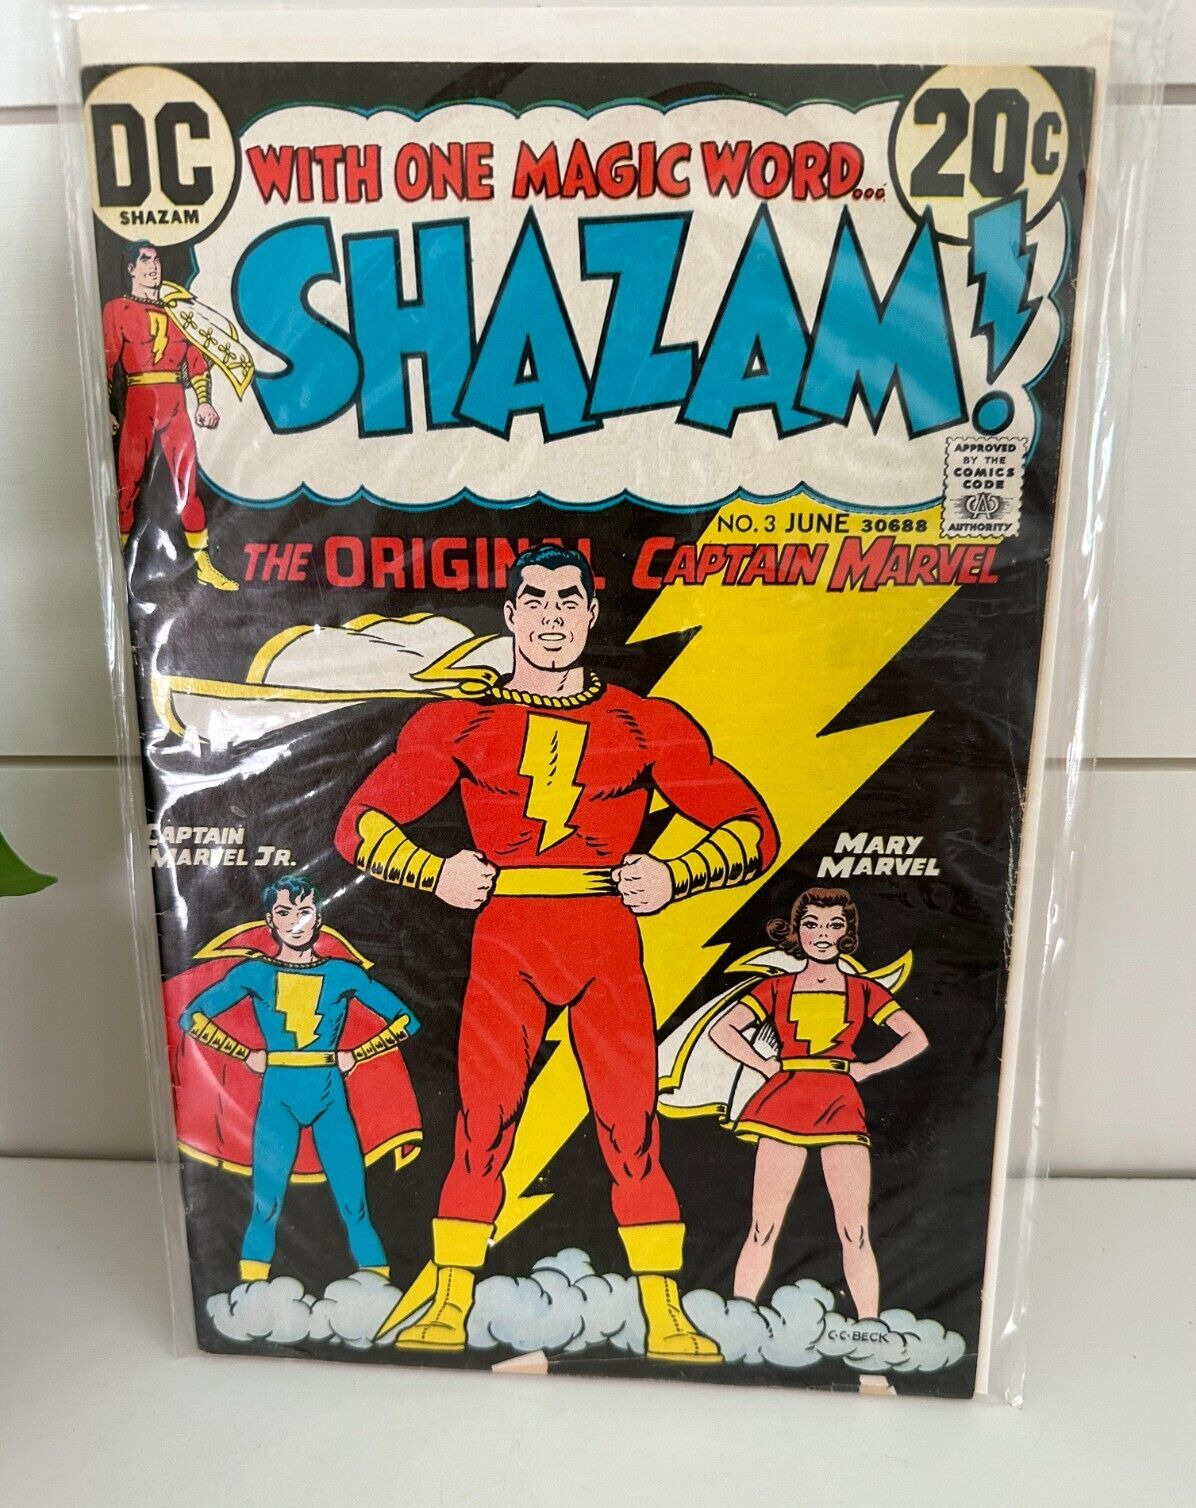 Shazam #3 June 30688 The Original Captain Marvel Comic Book